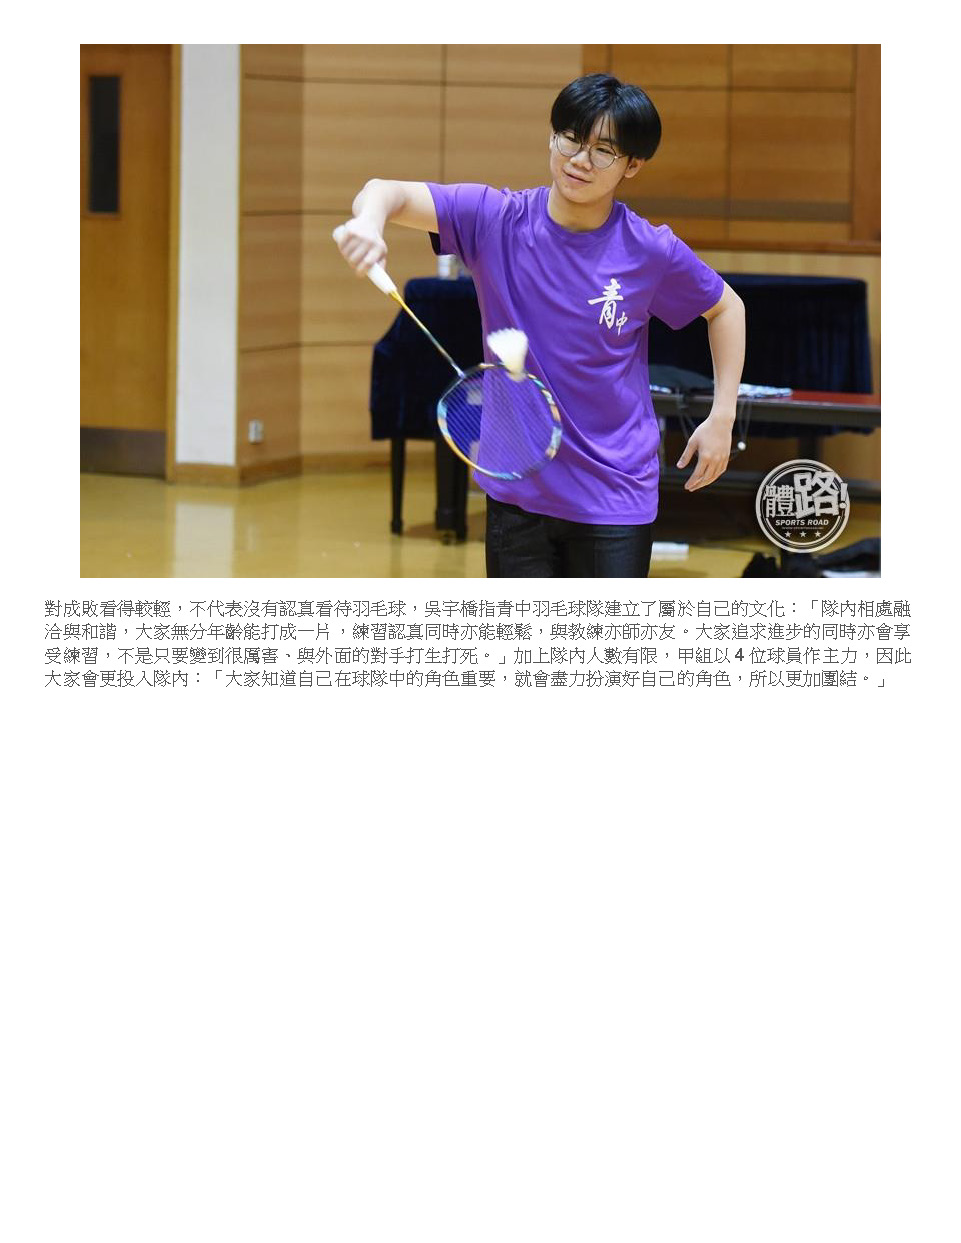 News on Sportsroad-Hong Kong Sports News (2023/5/11)